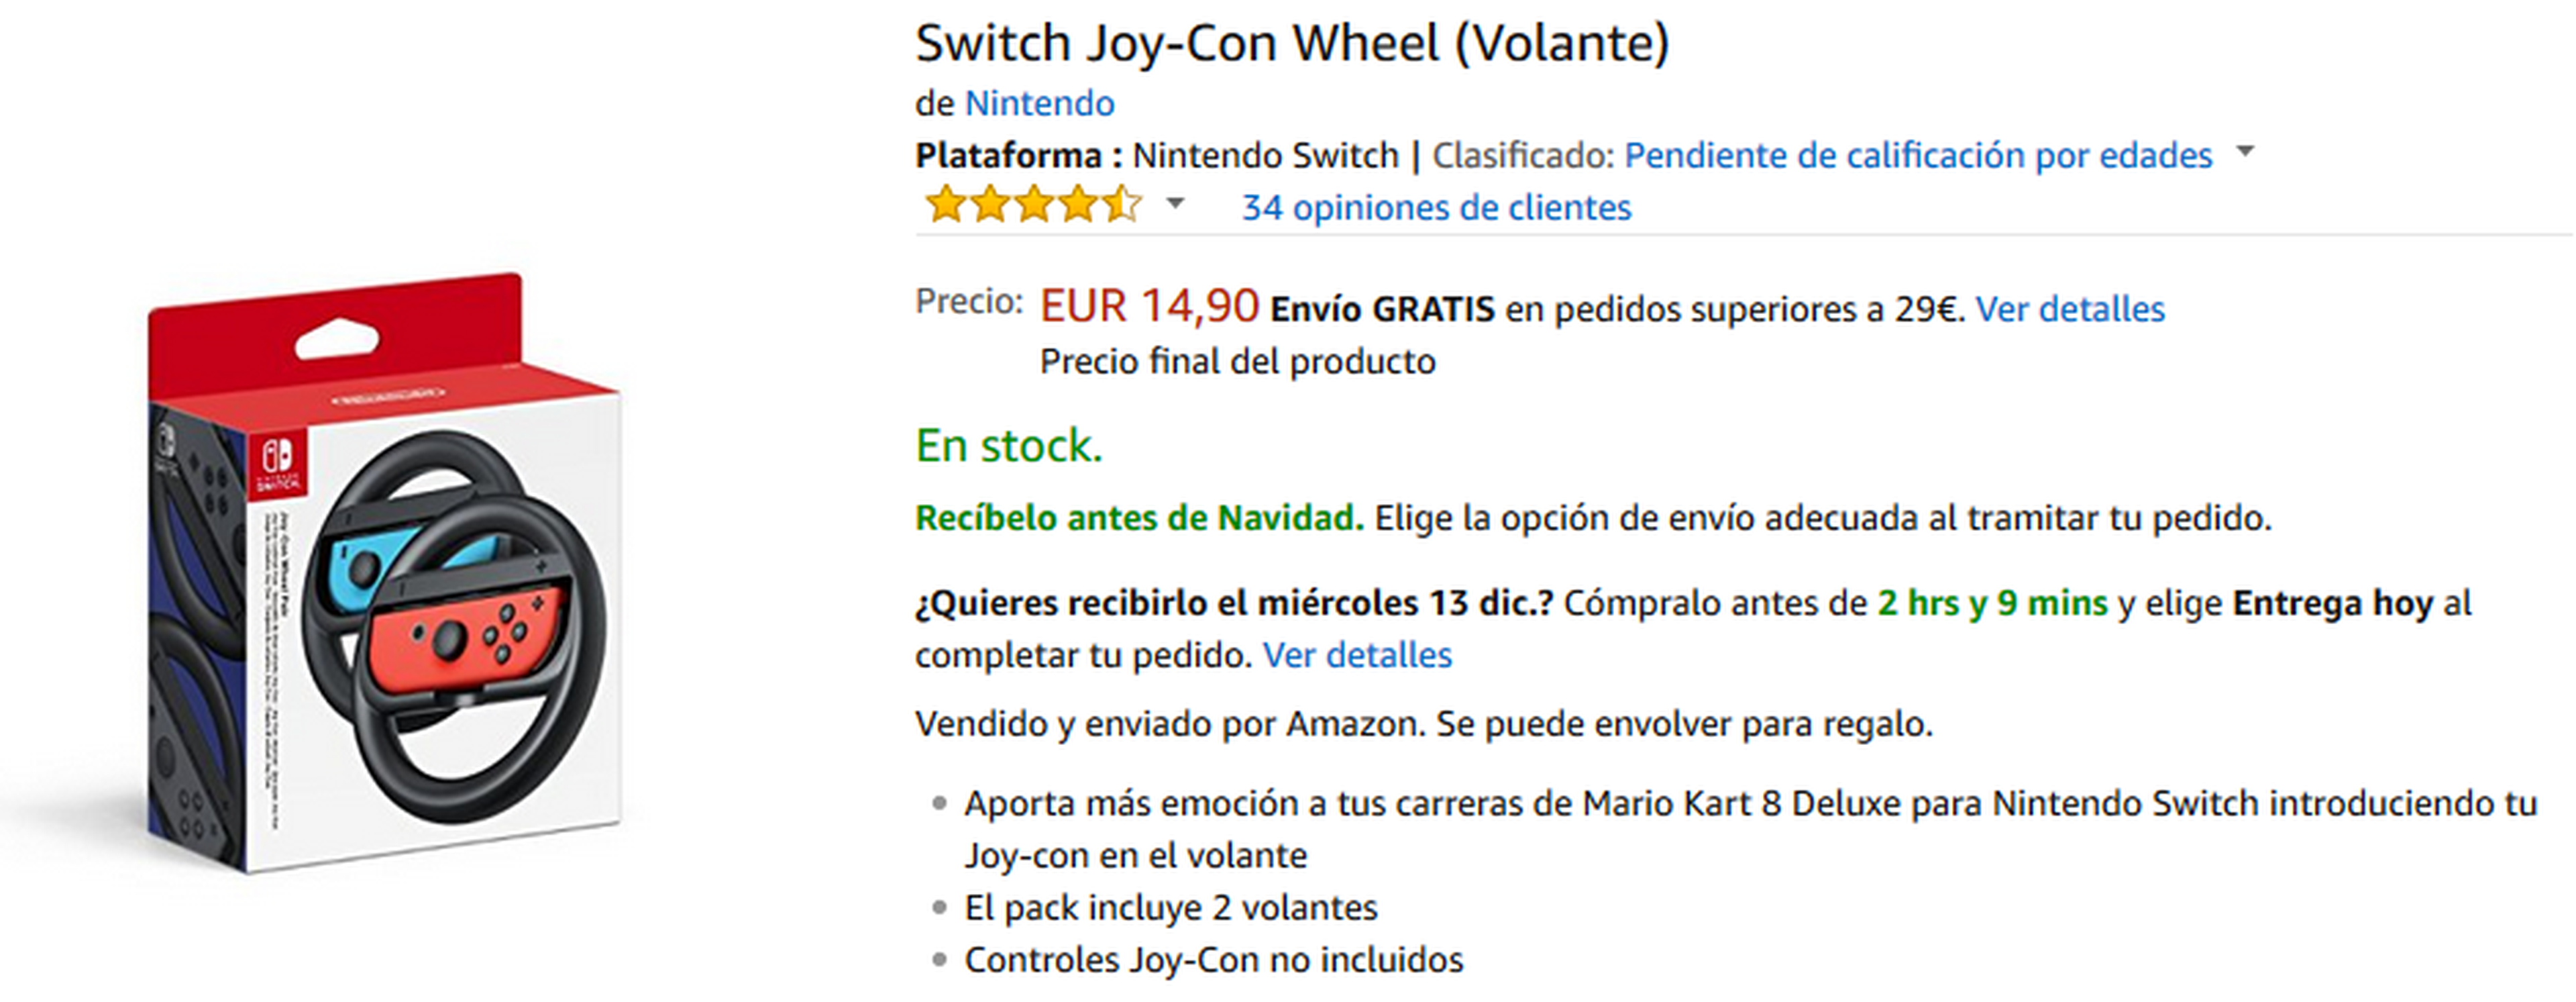 Volante Switch Joy-Con Wheel para Nintendo Switch